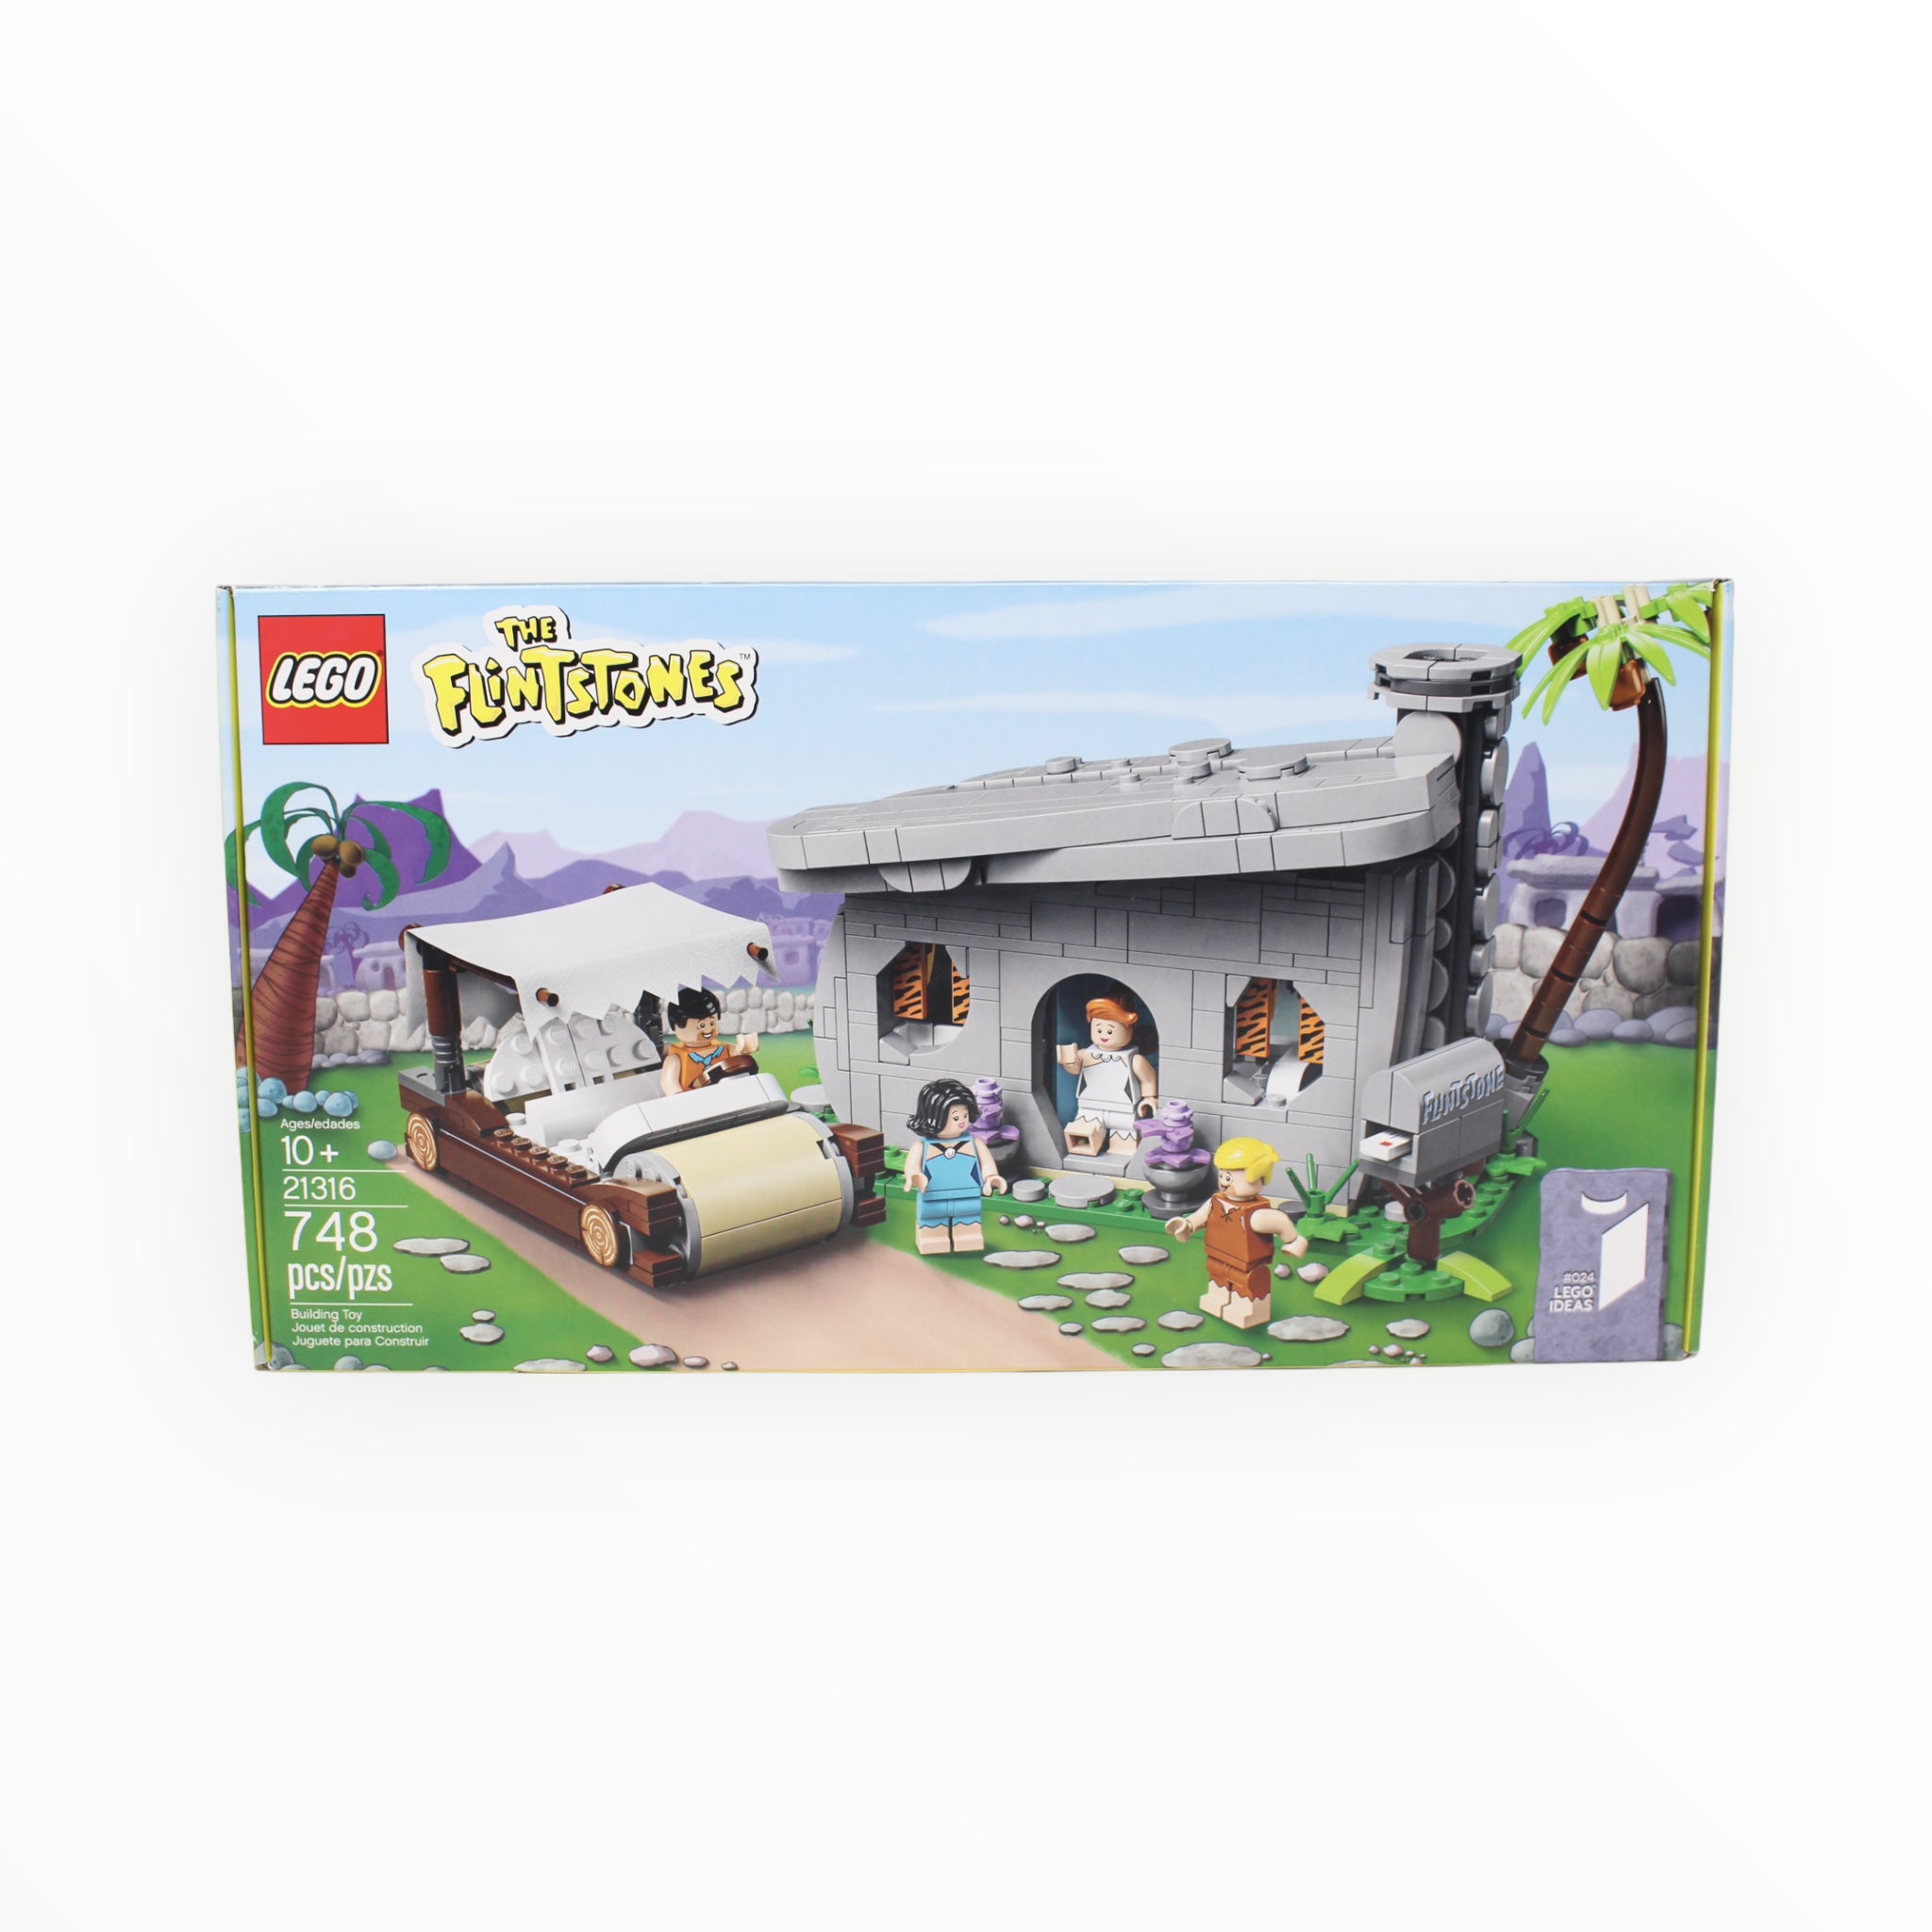 LEGO Ideas 21316 The Flintstones-8 - The Brothers Brick